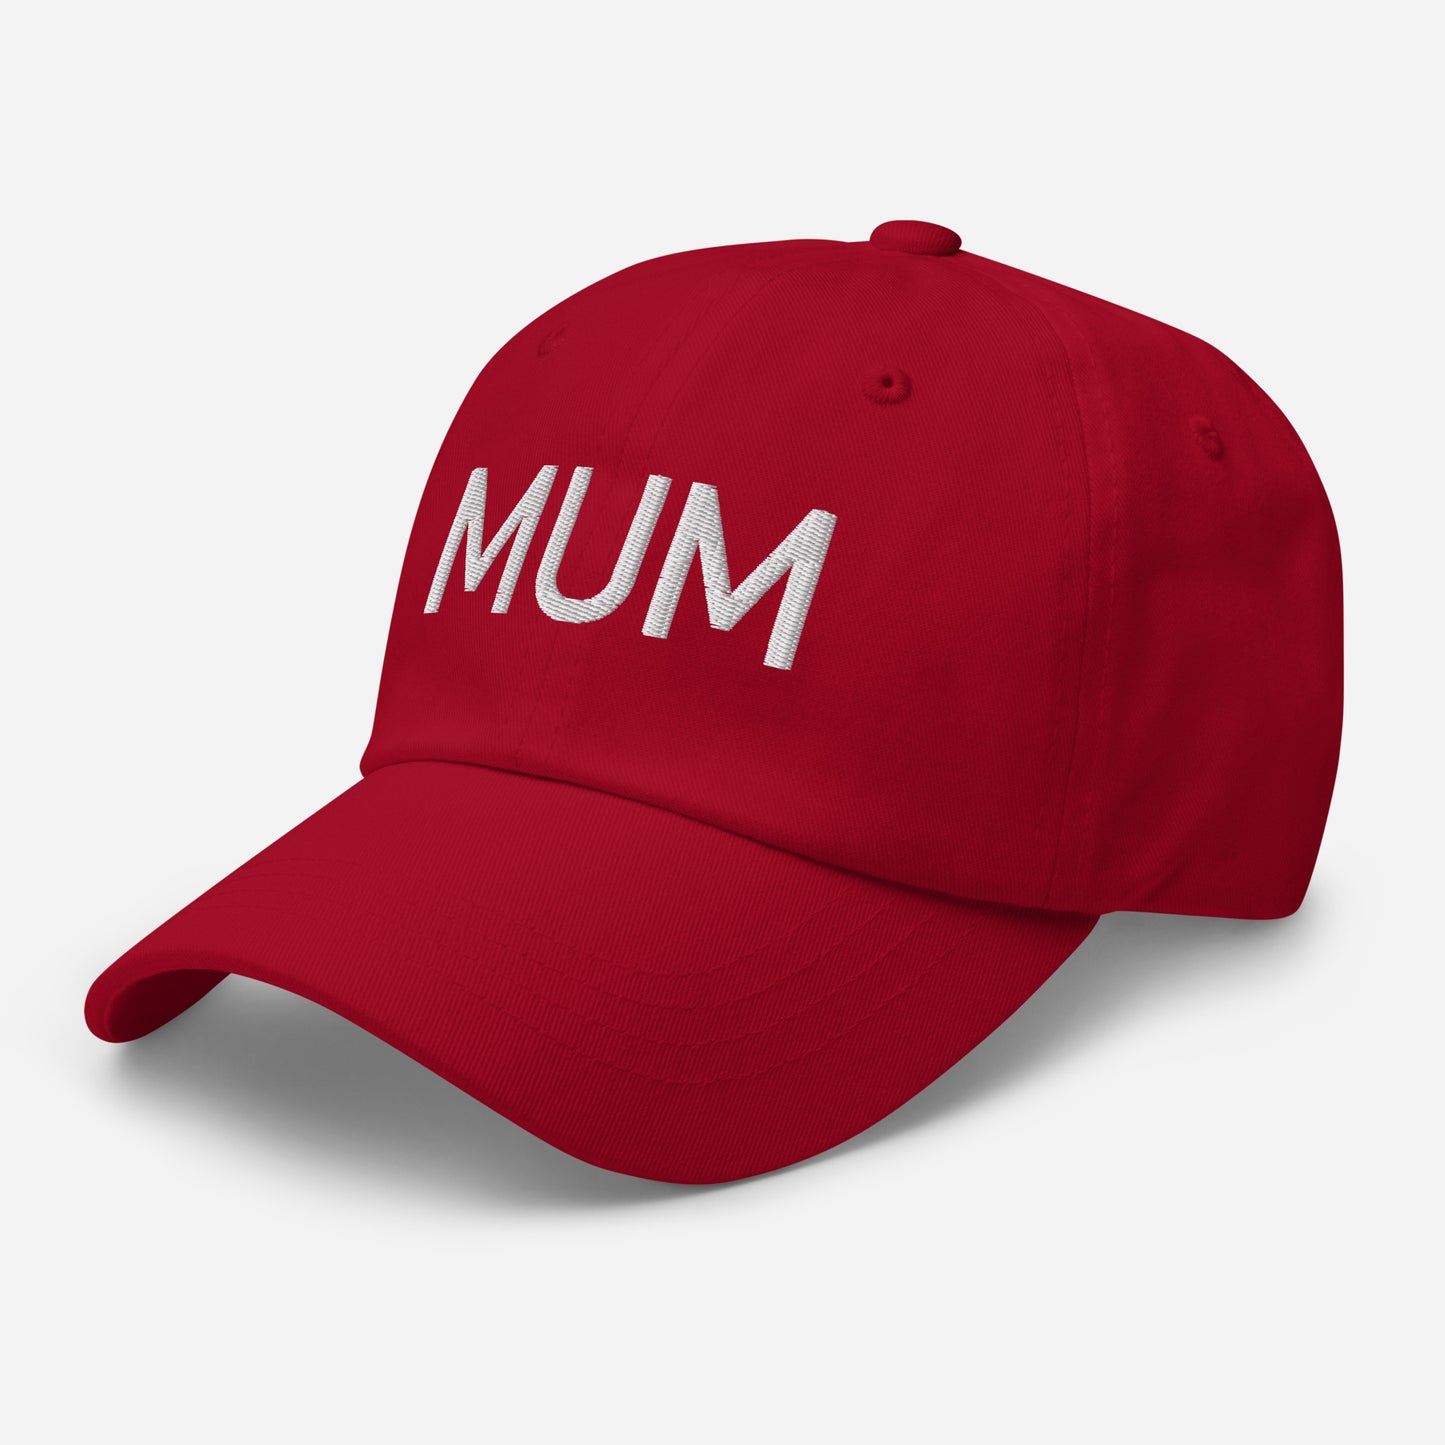 Mum - Sustainably Made Baseball Cap